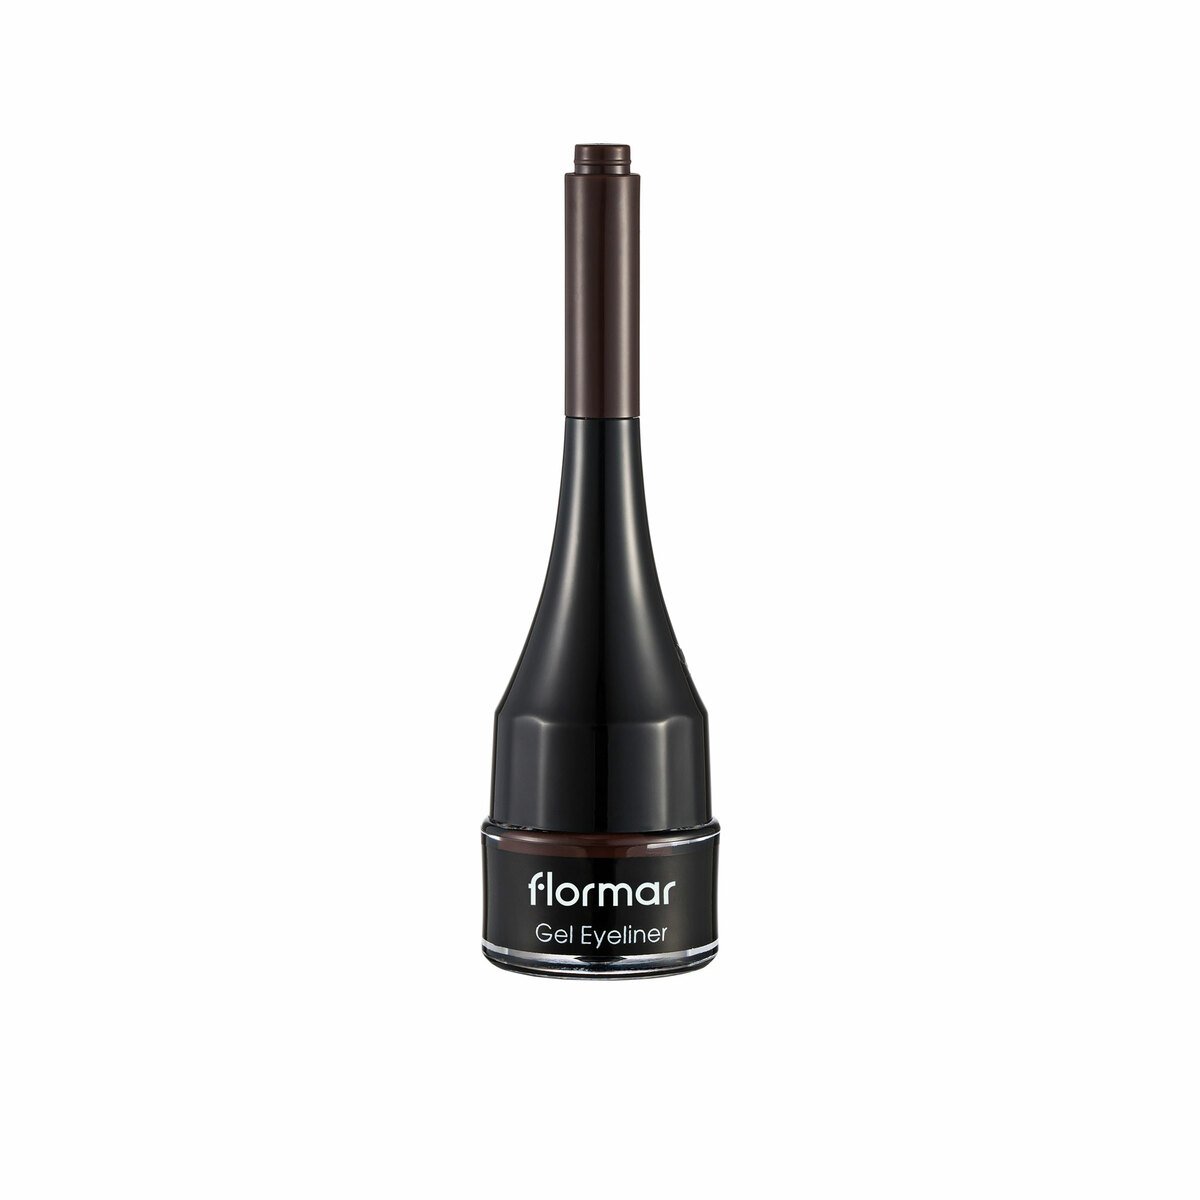 Flormar Gel Eyeliner re-formulated - 03 Bole Brown 1pc